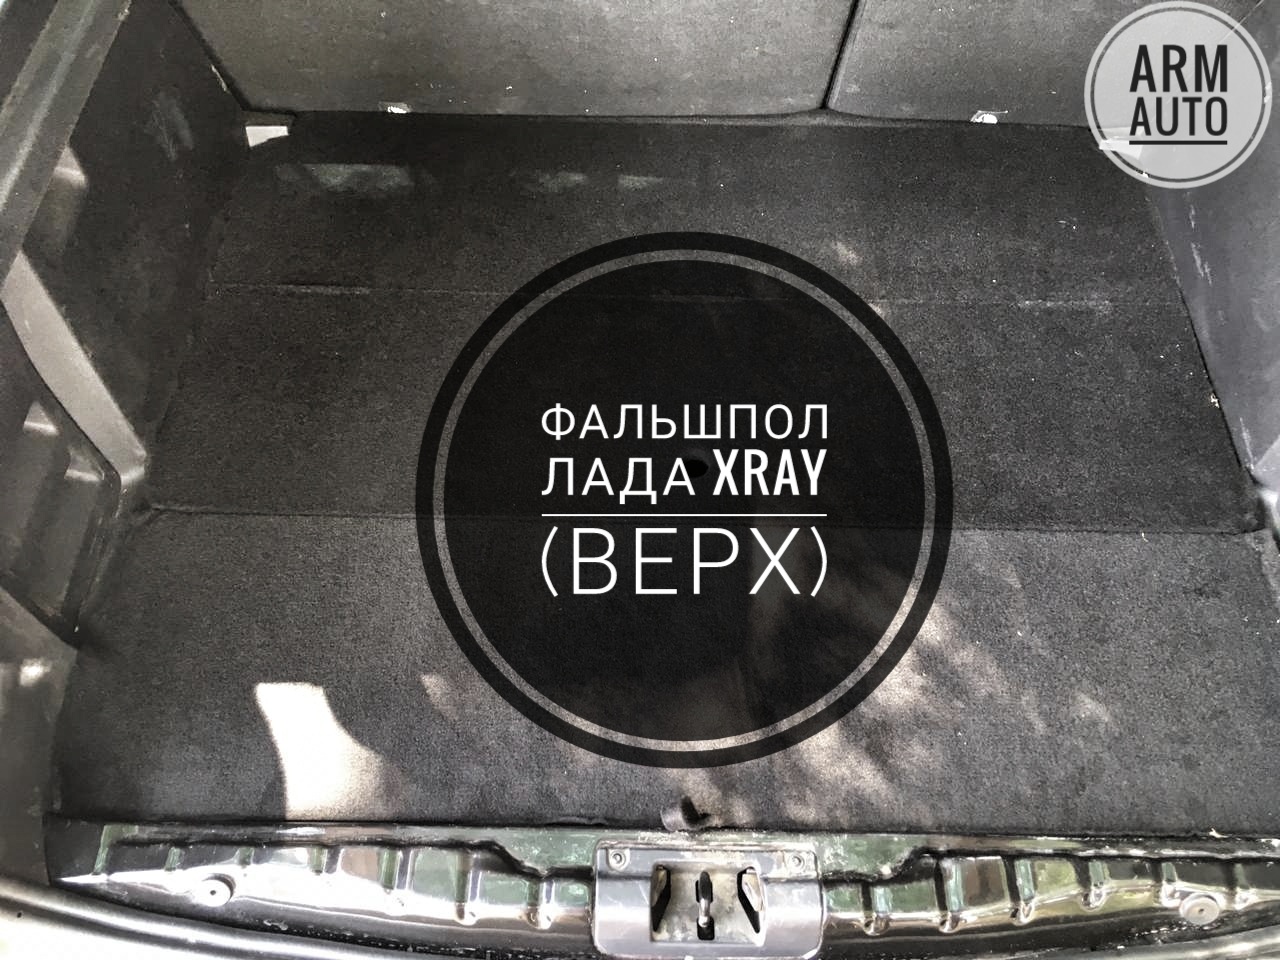 Фальшпол Lada X-RAY (верх)